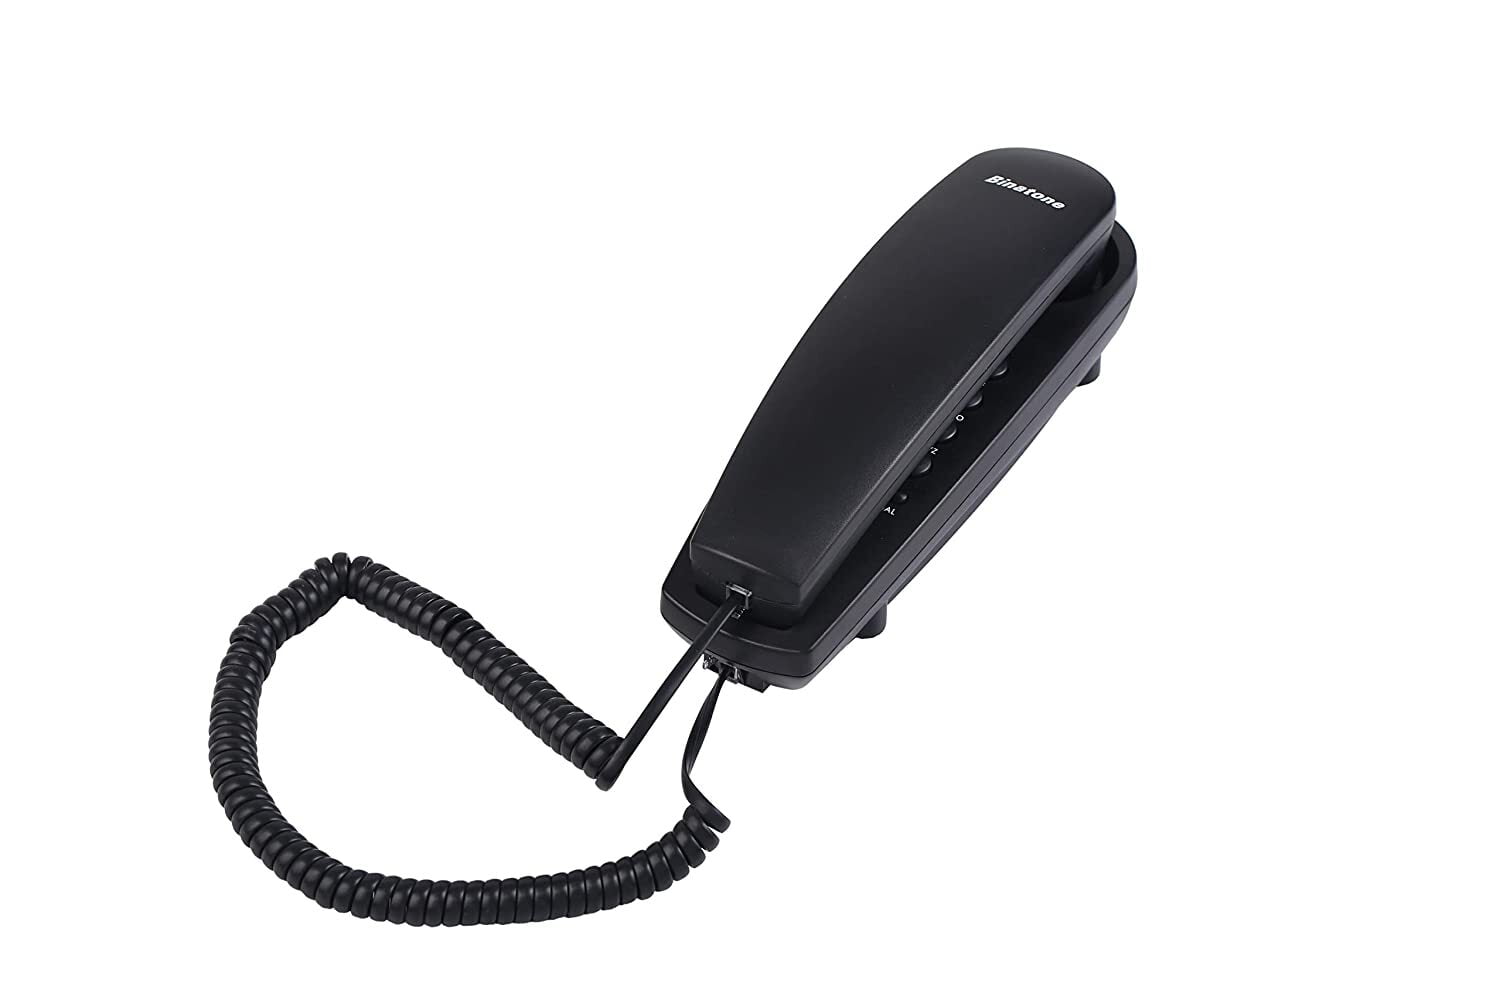 Binatone Trend 1 Corded Landline Phone Online On Dillimall.Com